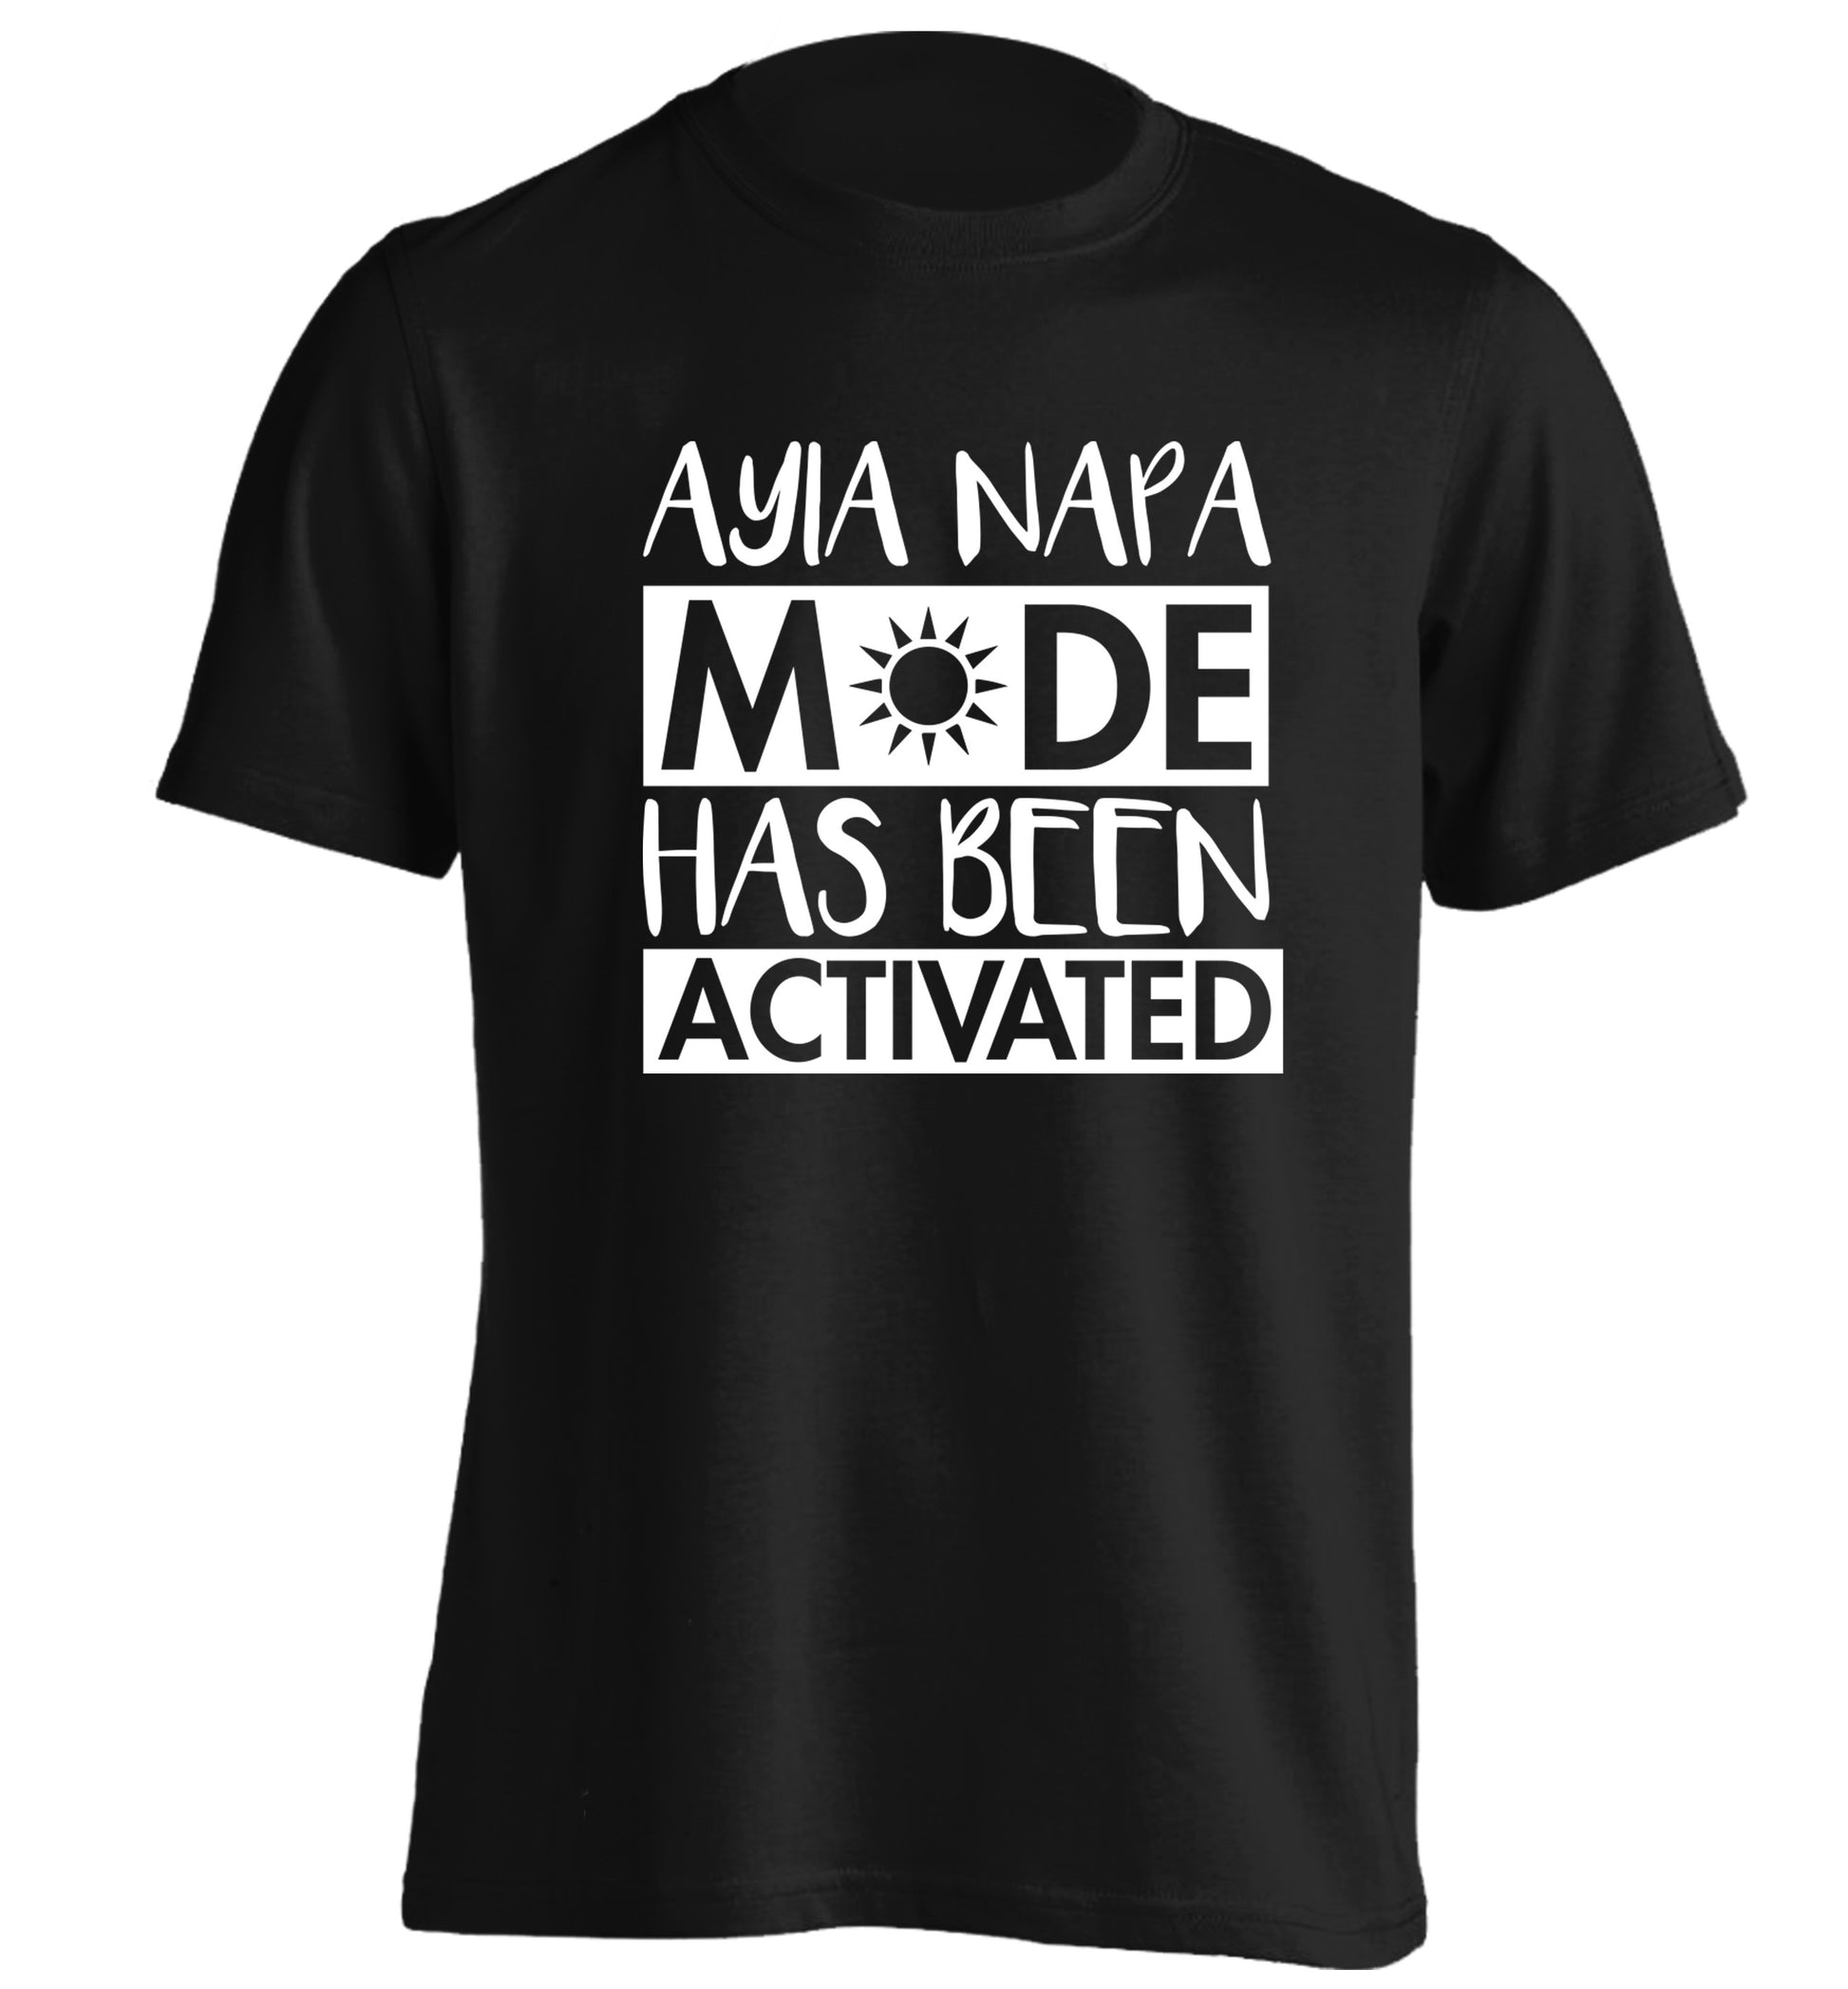 Aiya Napa mode has been activated adults unisex black Tshirt 2XL